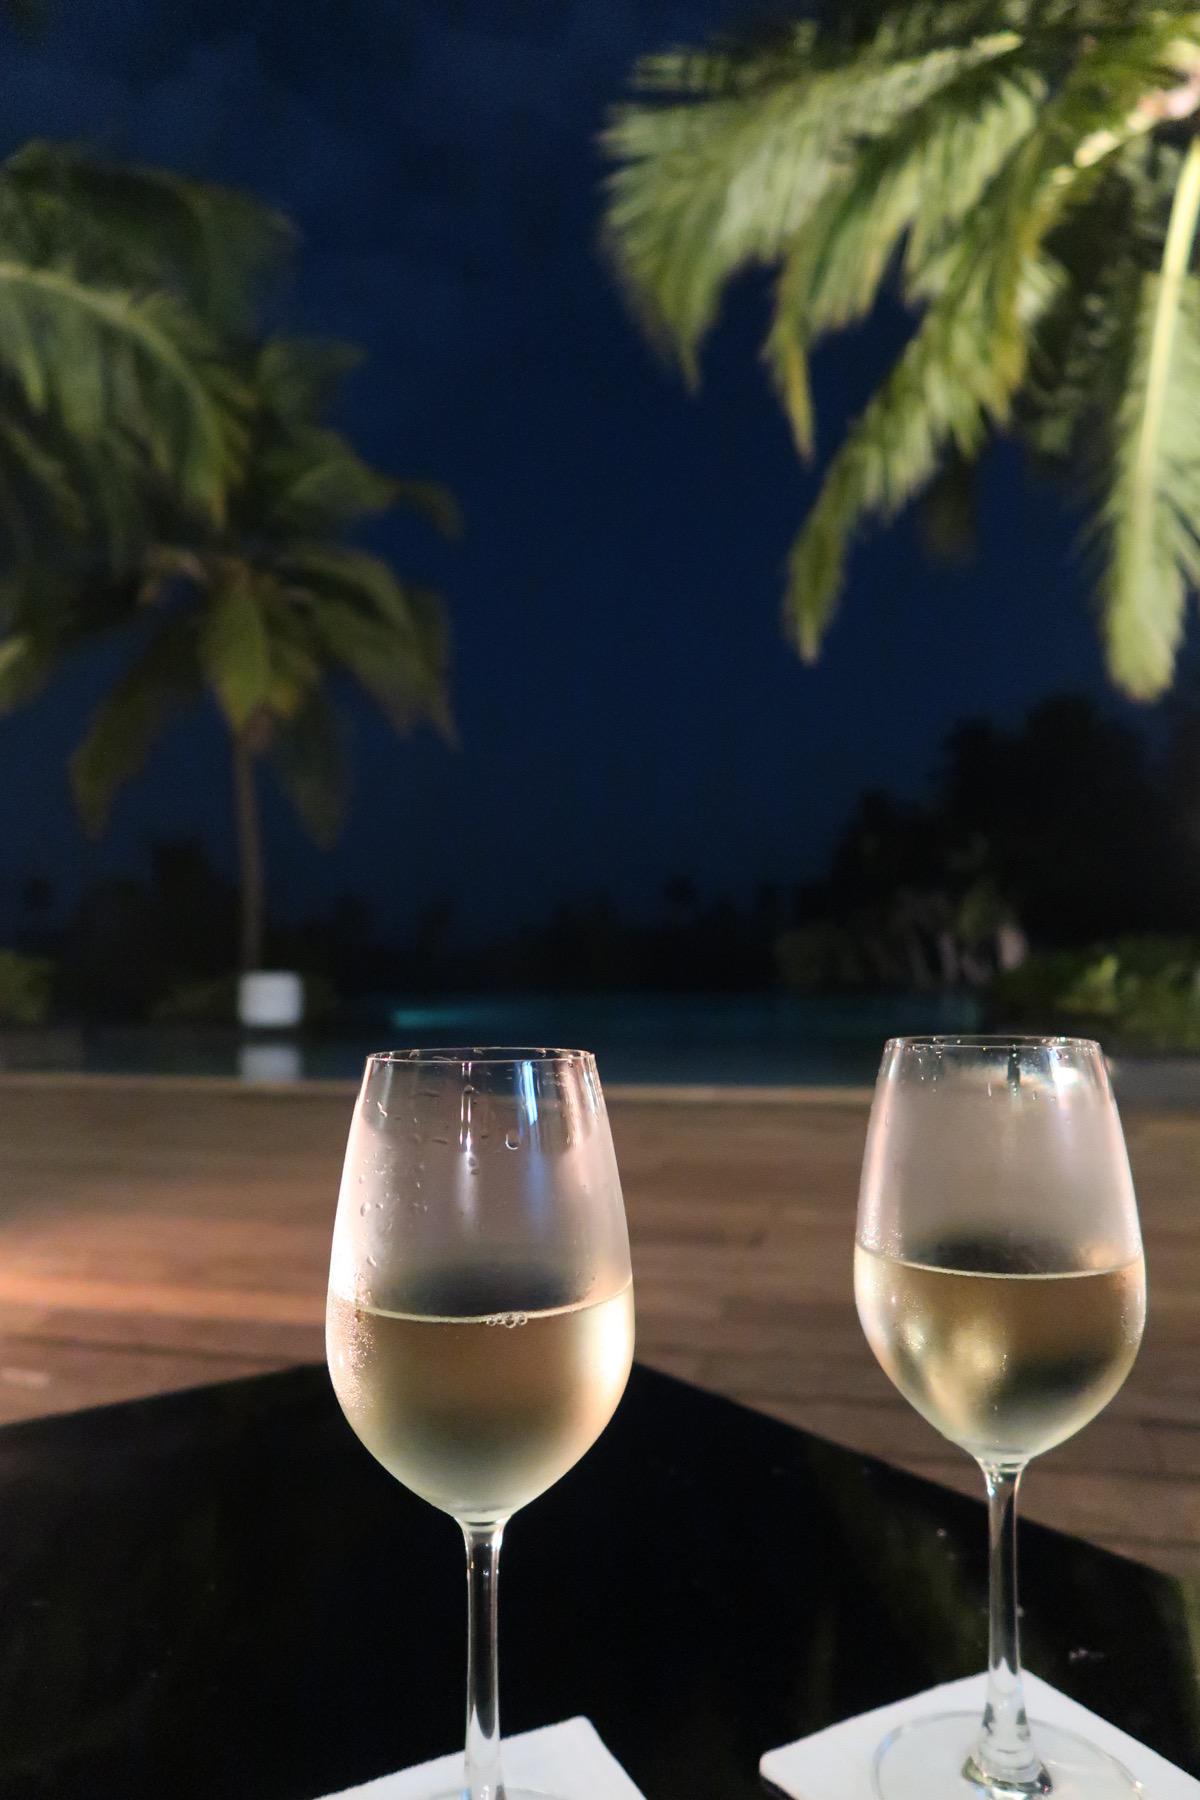 Alila Diwa Goa - Luxury Hotel Review